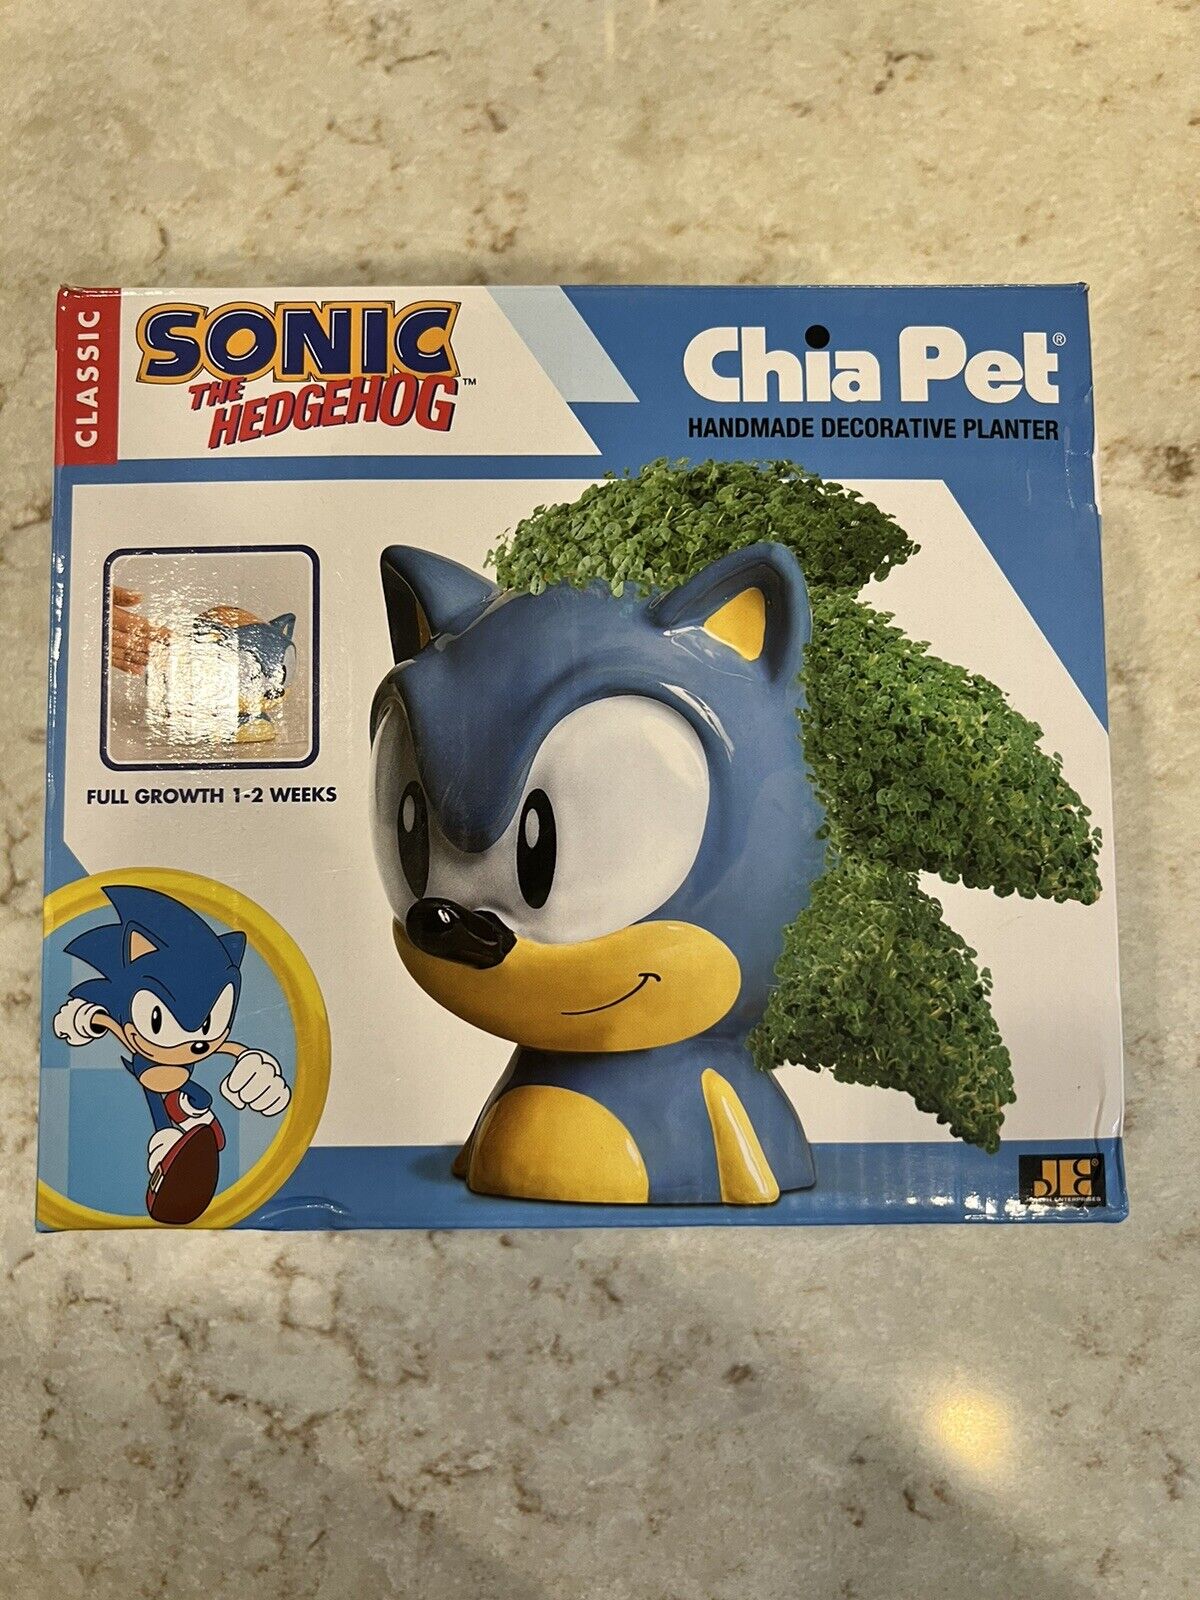 Classic Sonic The Hedgehog Chia Pet, Handmade Decorative Planter - NEW